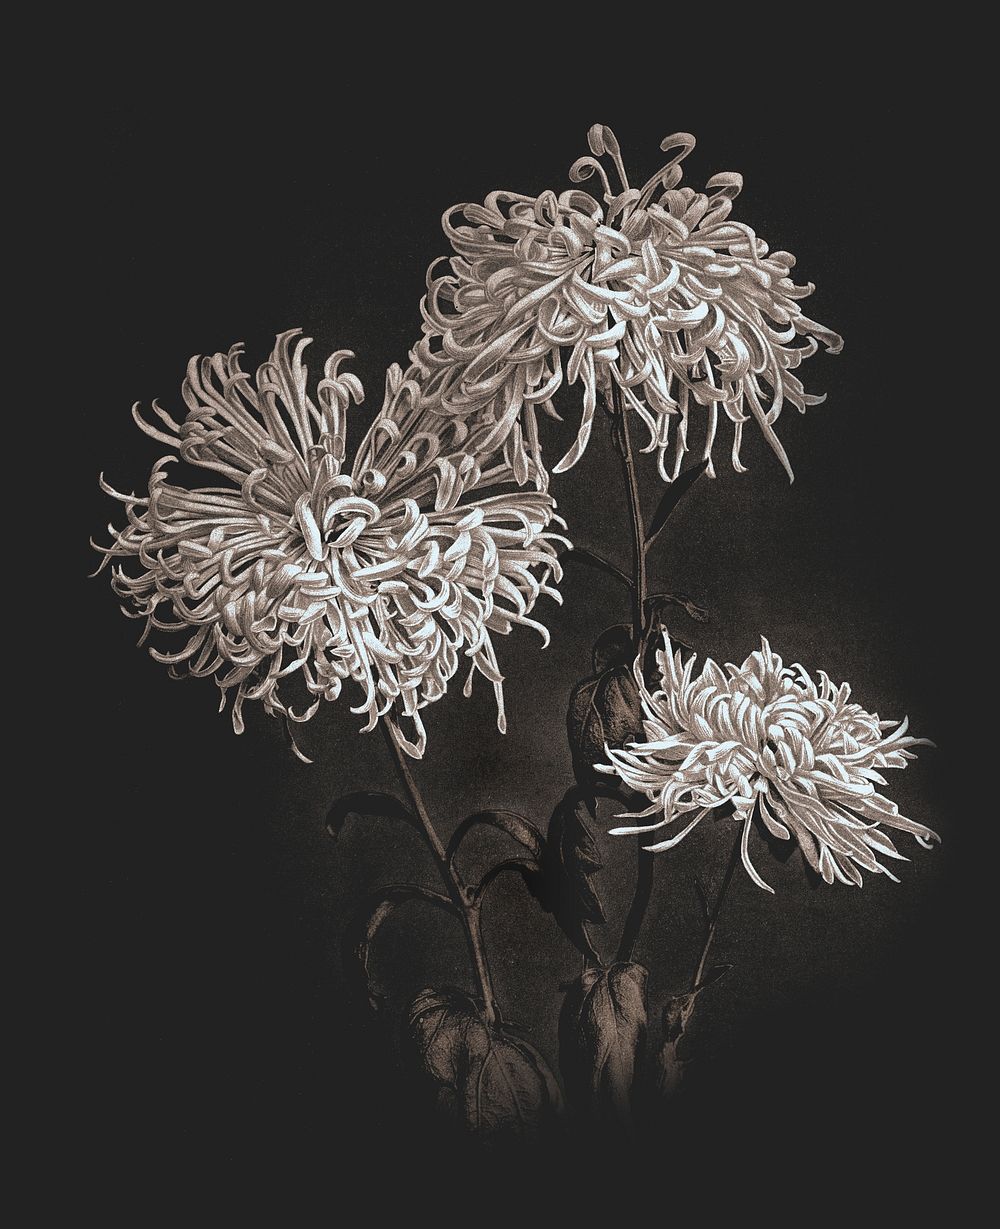 Three white chrysanthemums vintage illustration artwork, remix from orginal photography.